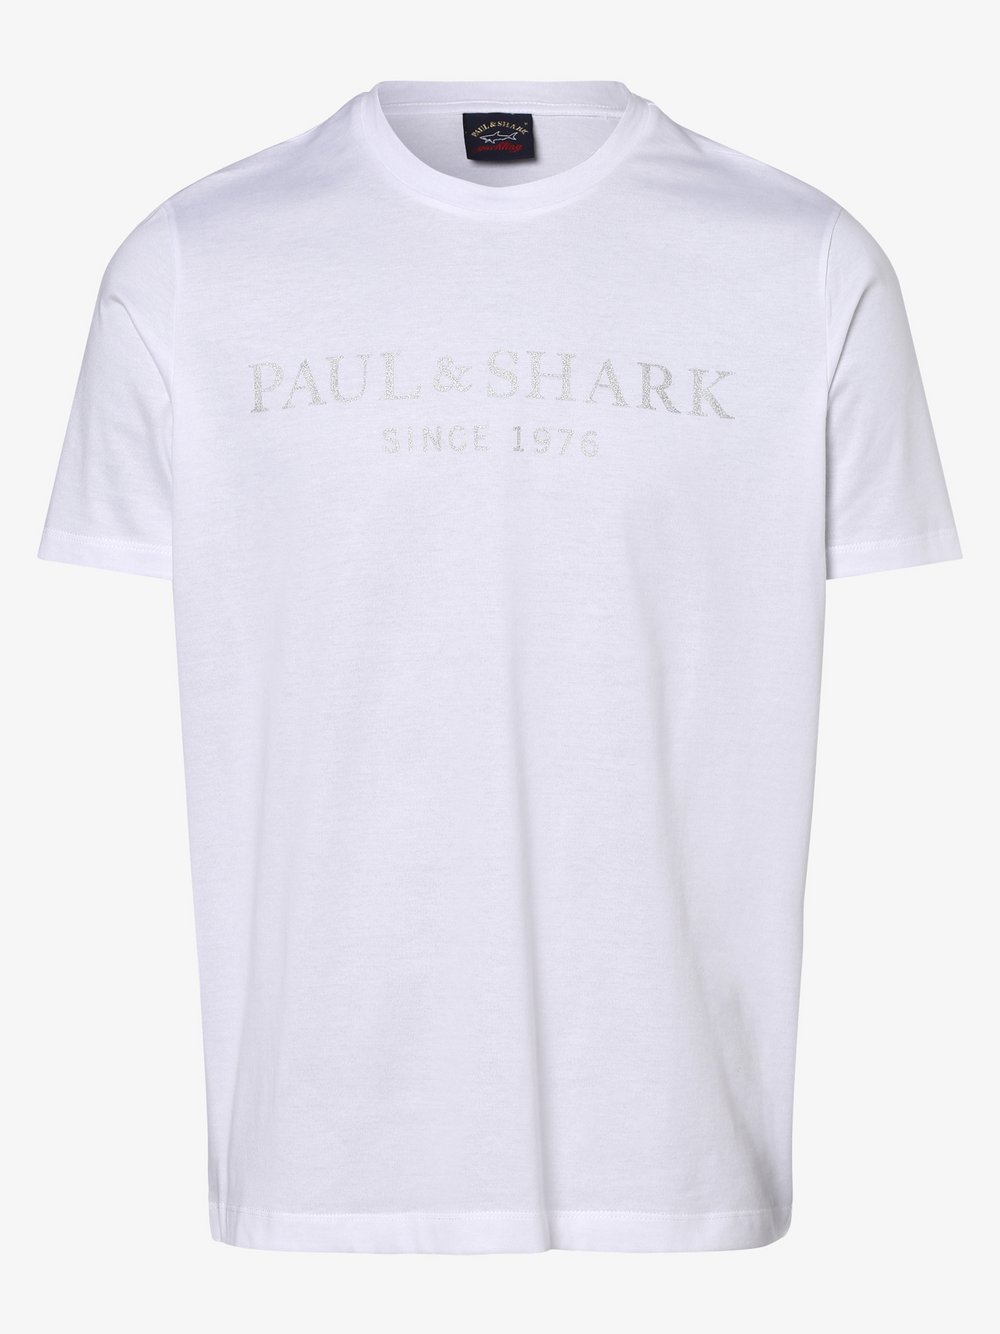 Paul & Shark - T-shirt męski, biały